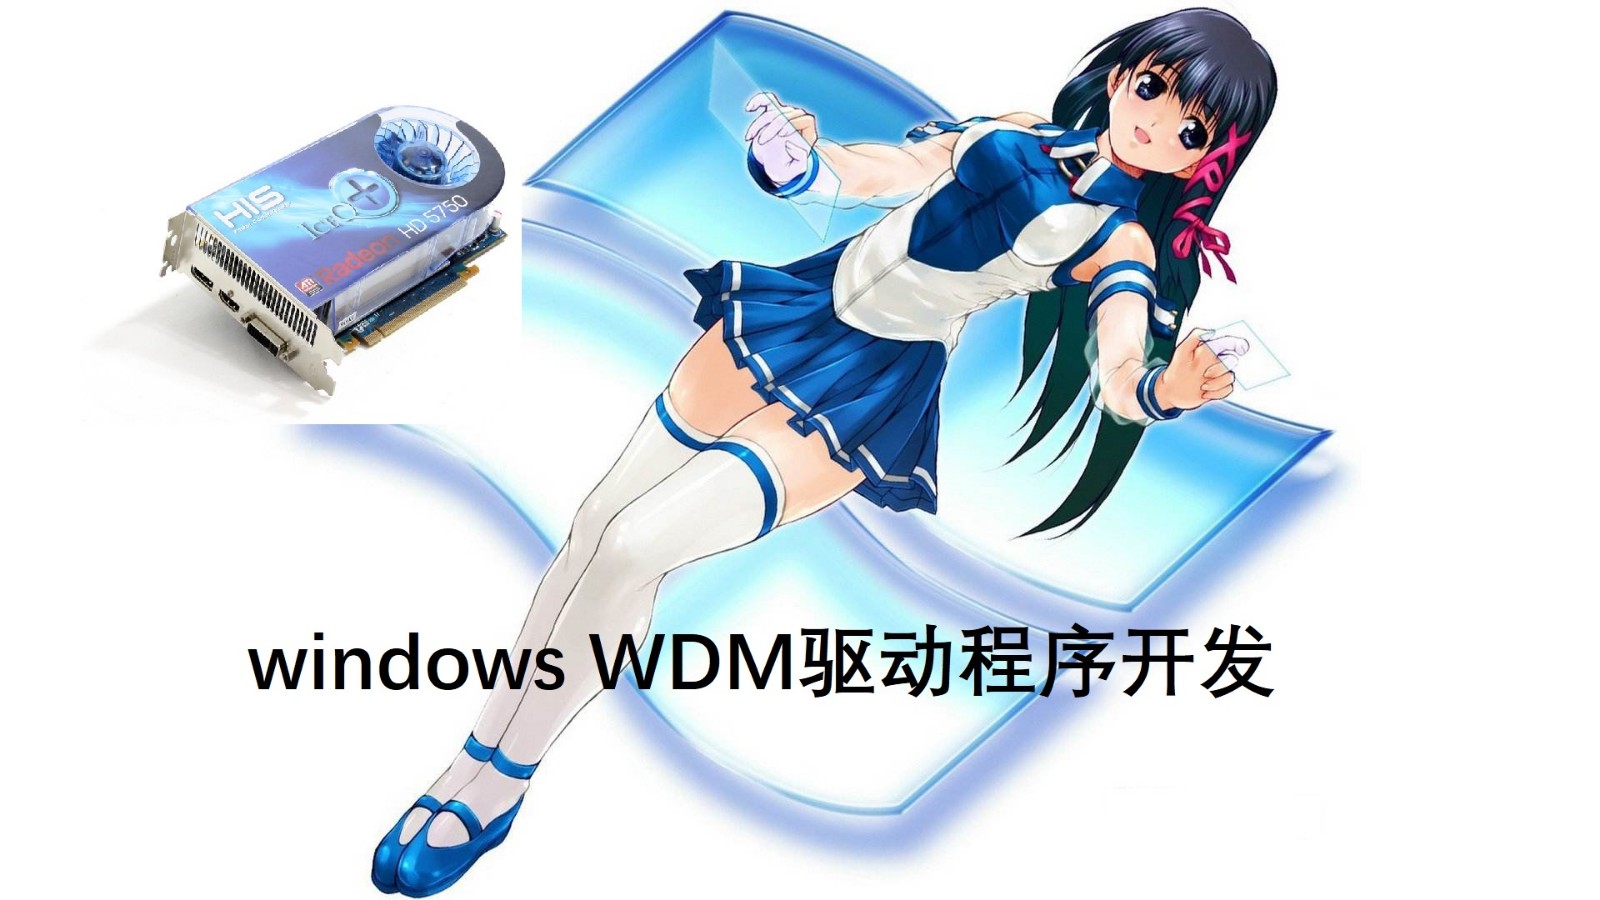 windows wdm驱动程序开发视频课程